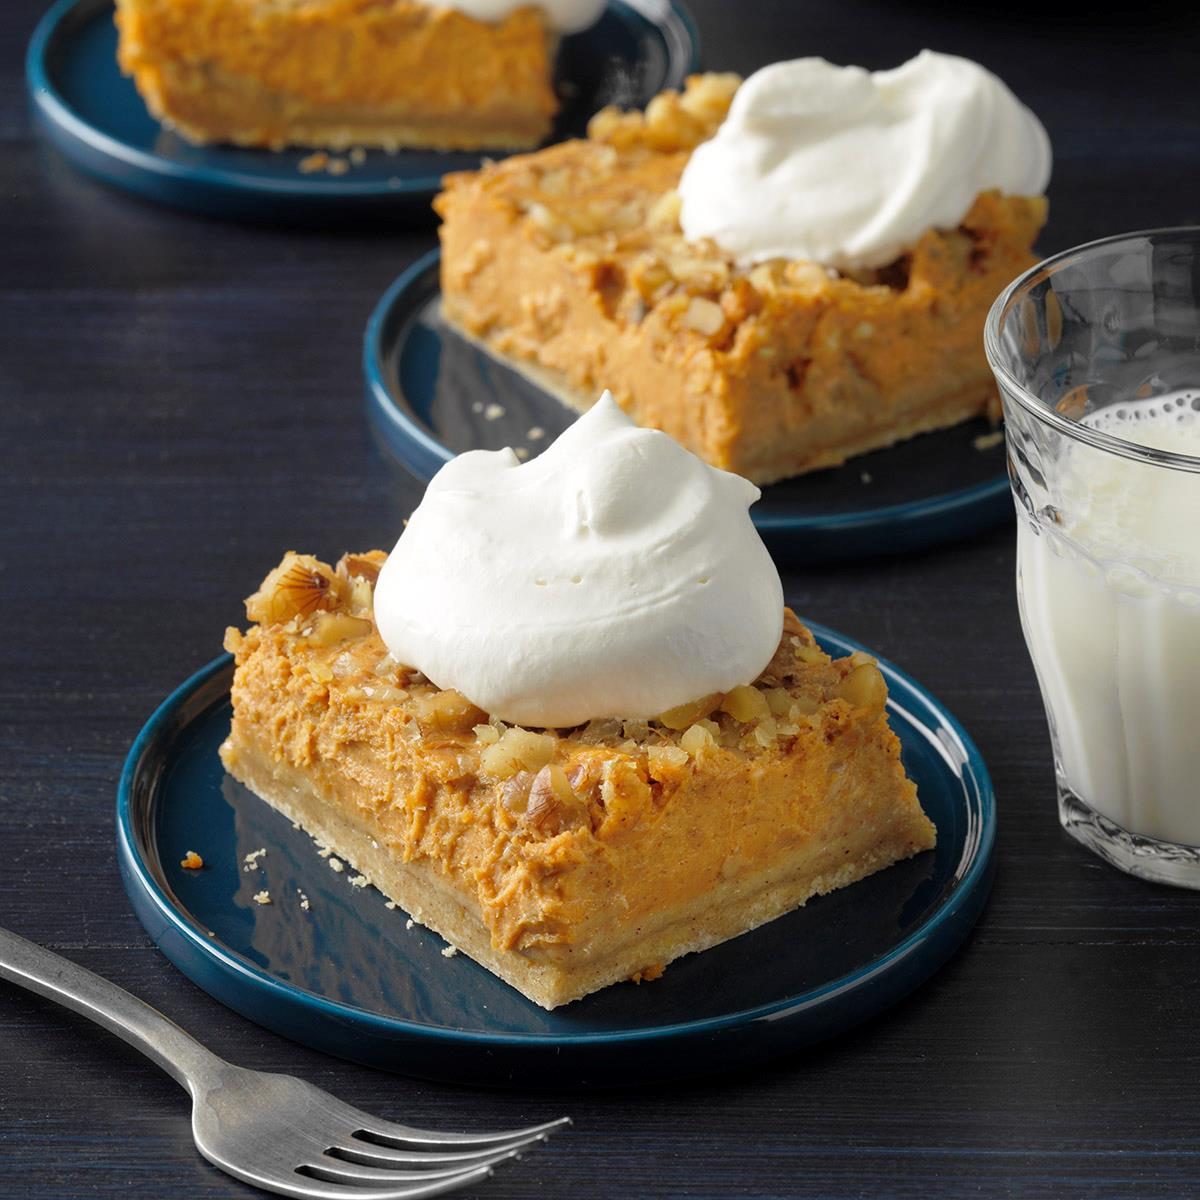 Pumpkin Cheesecake Dessert Recipe: How to Make It